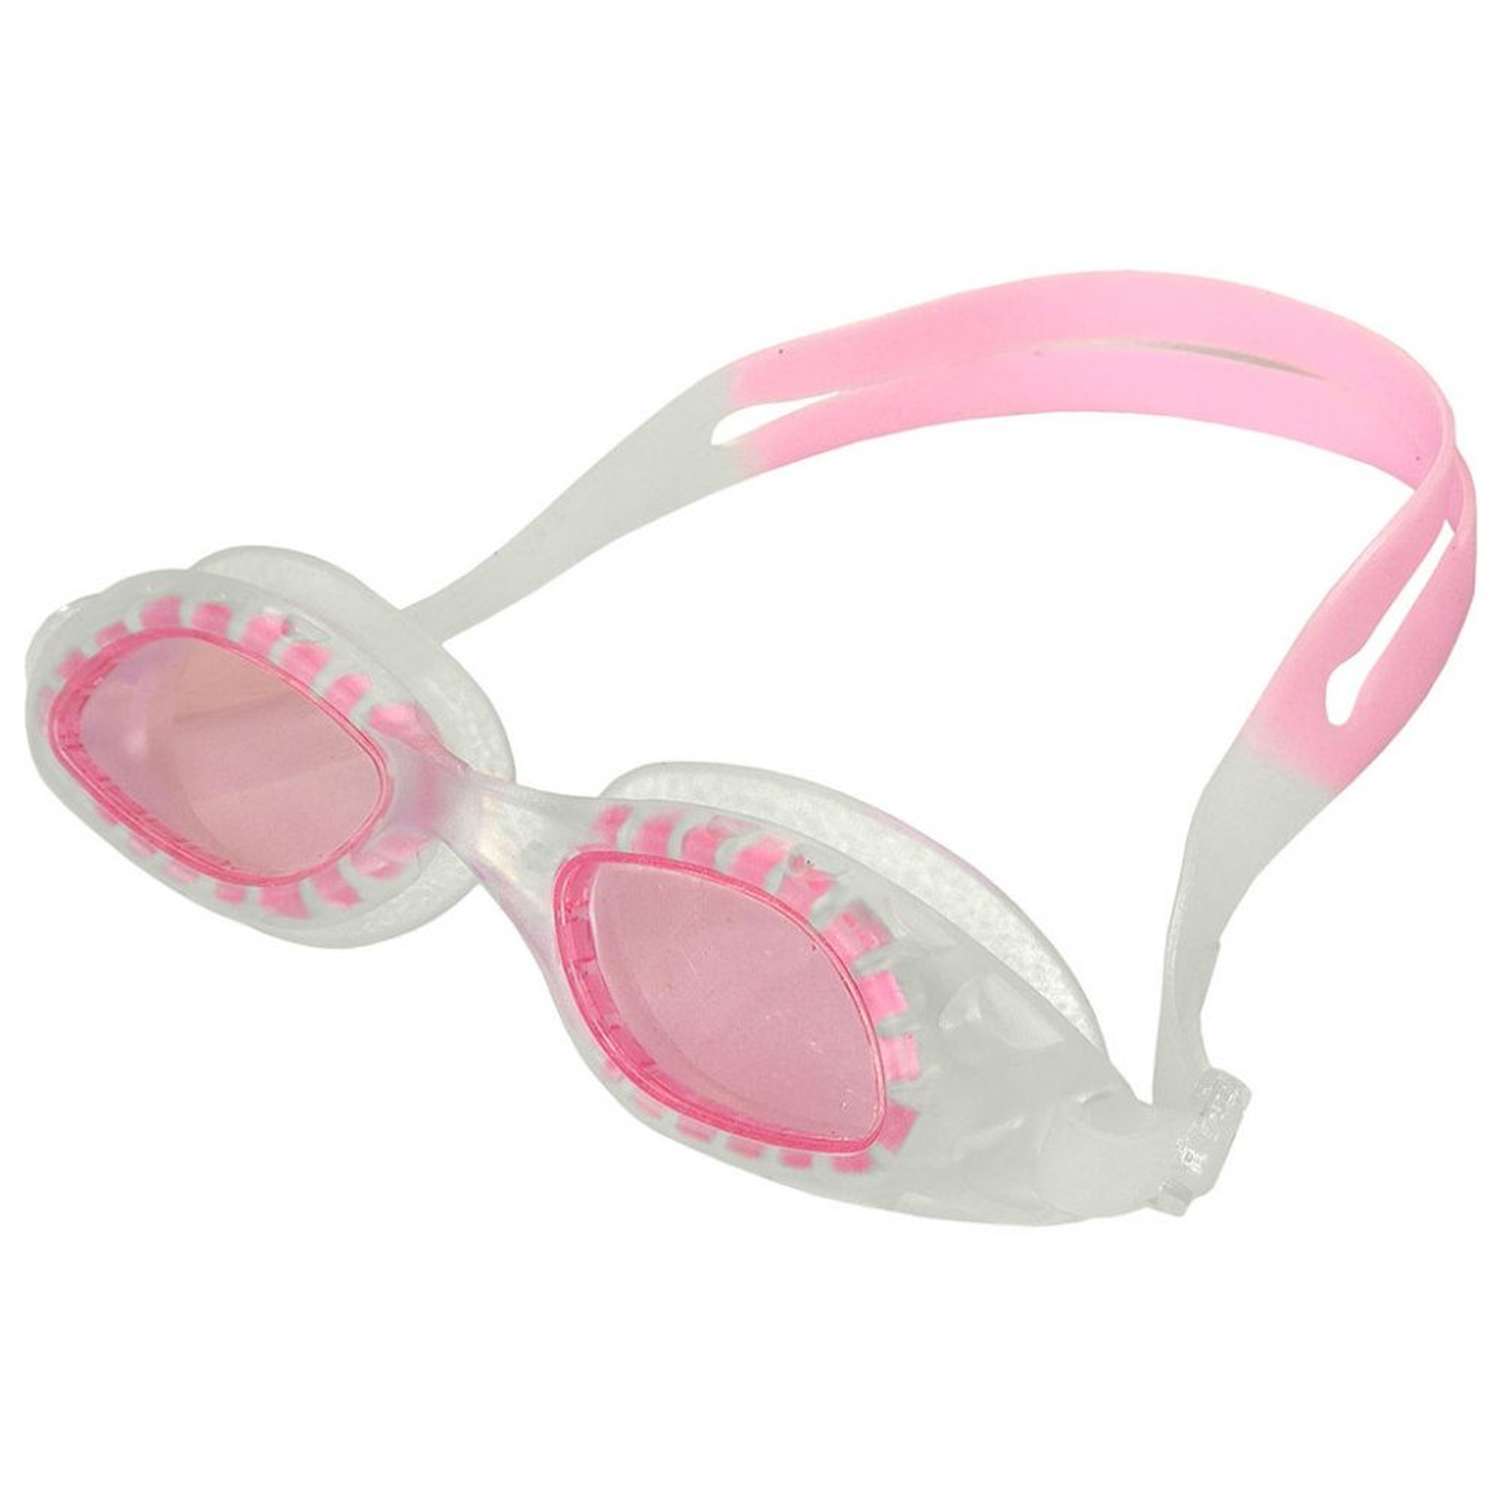 Очки для плавания Hawk E36858-2 детские розовые - фото 1